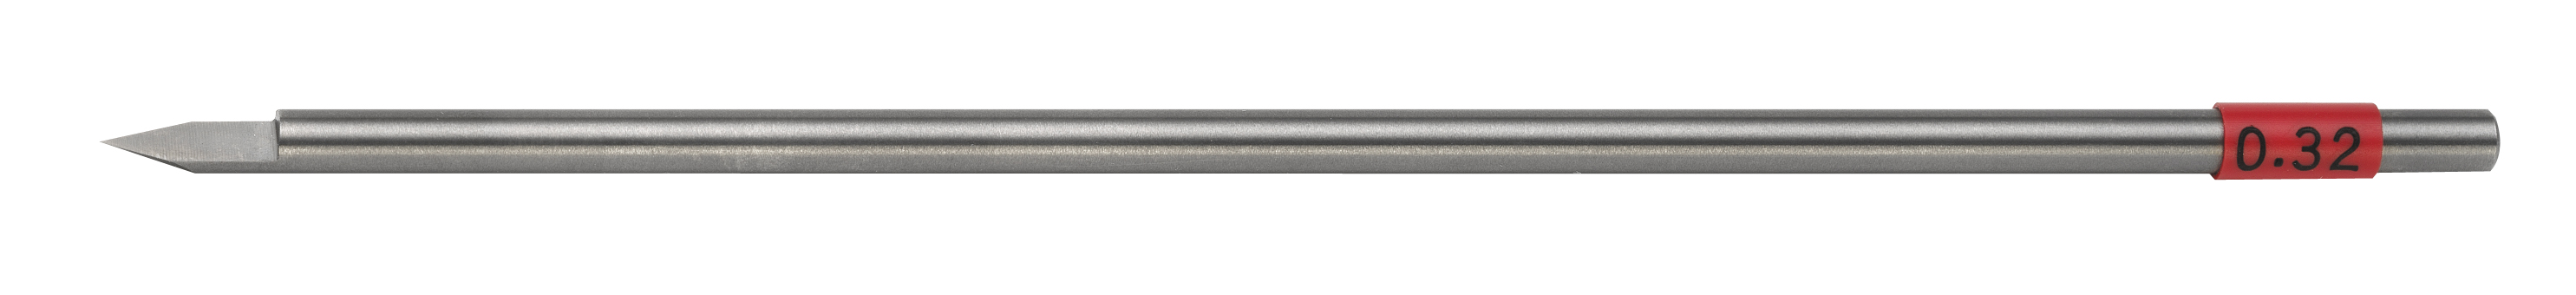 WS-Fräser Schaft-Ø 4,36 mm Breite 0,32 mm Gravograph